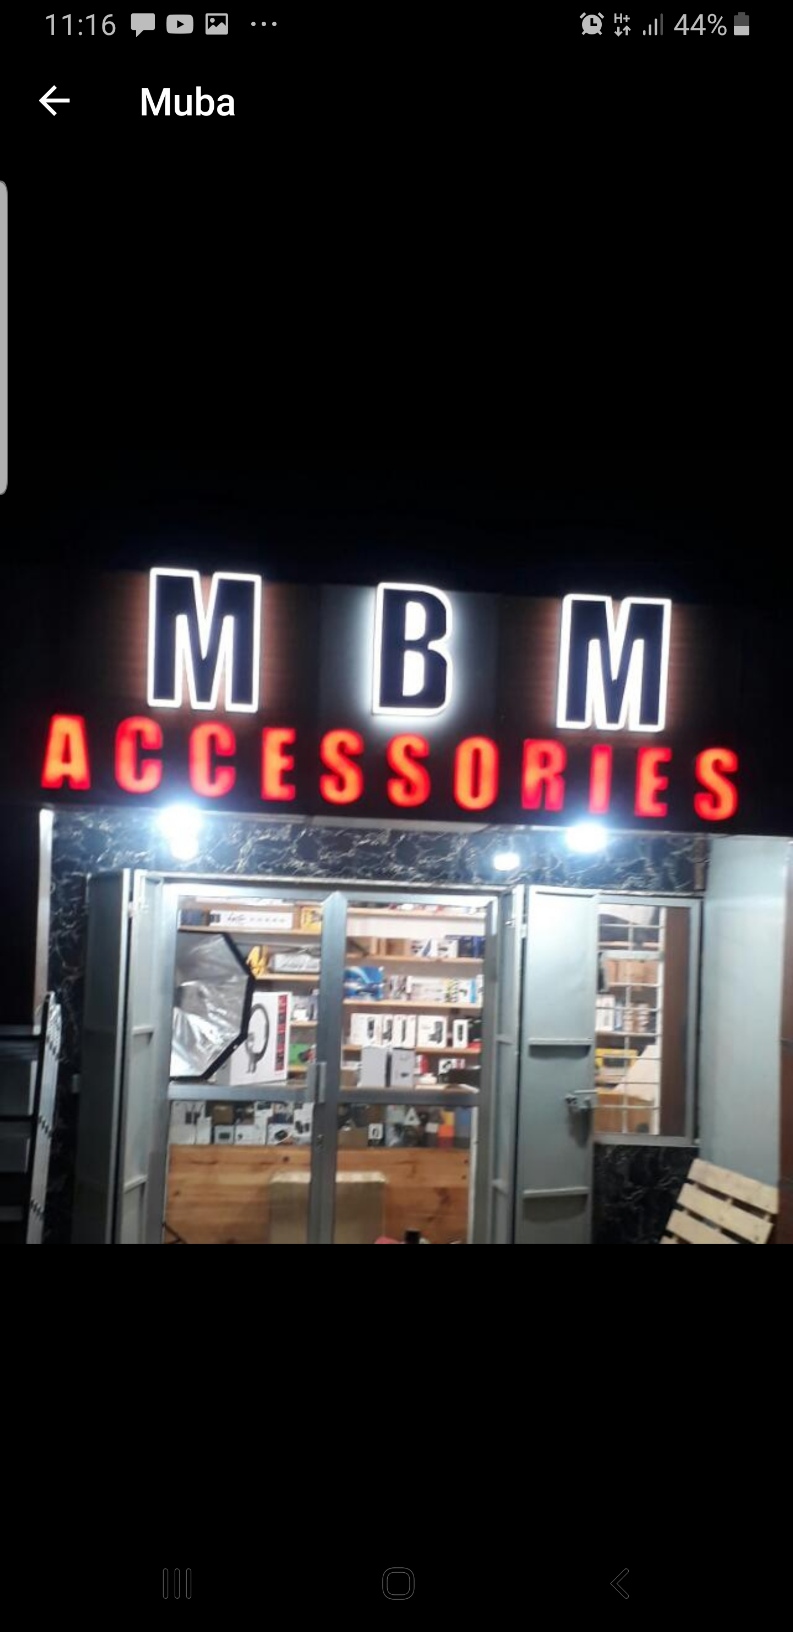 MBM Accessories